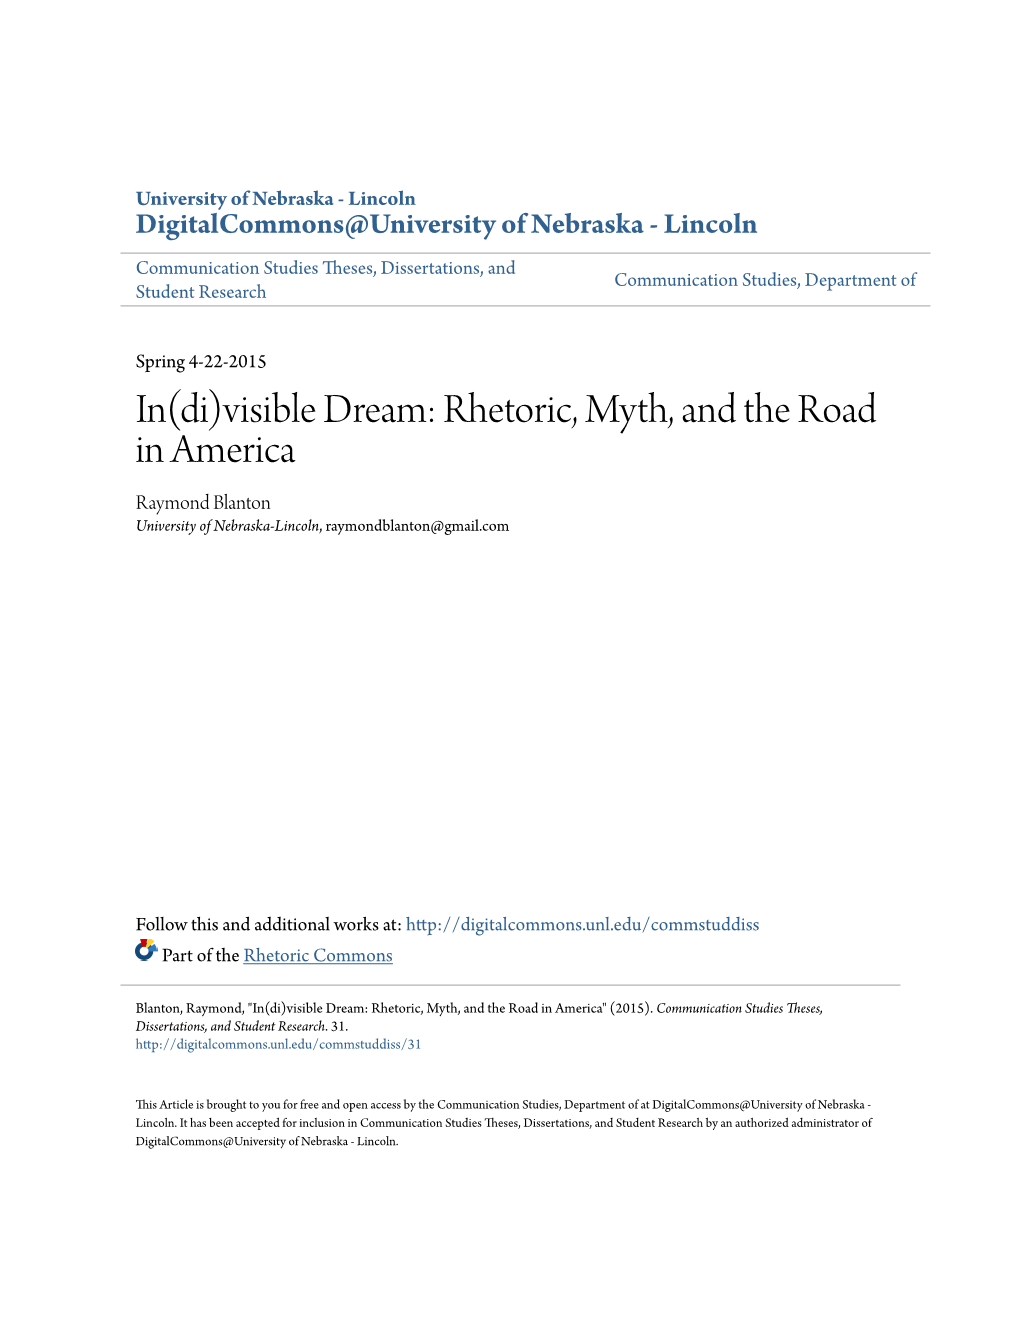 Rhetoric, Myth, and the Road in America Raymond Blanton University of Nebraska-Lincoln, Raymondblanton@Gmail.Com